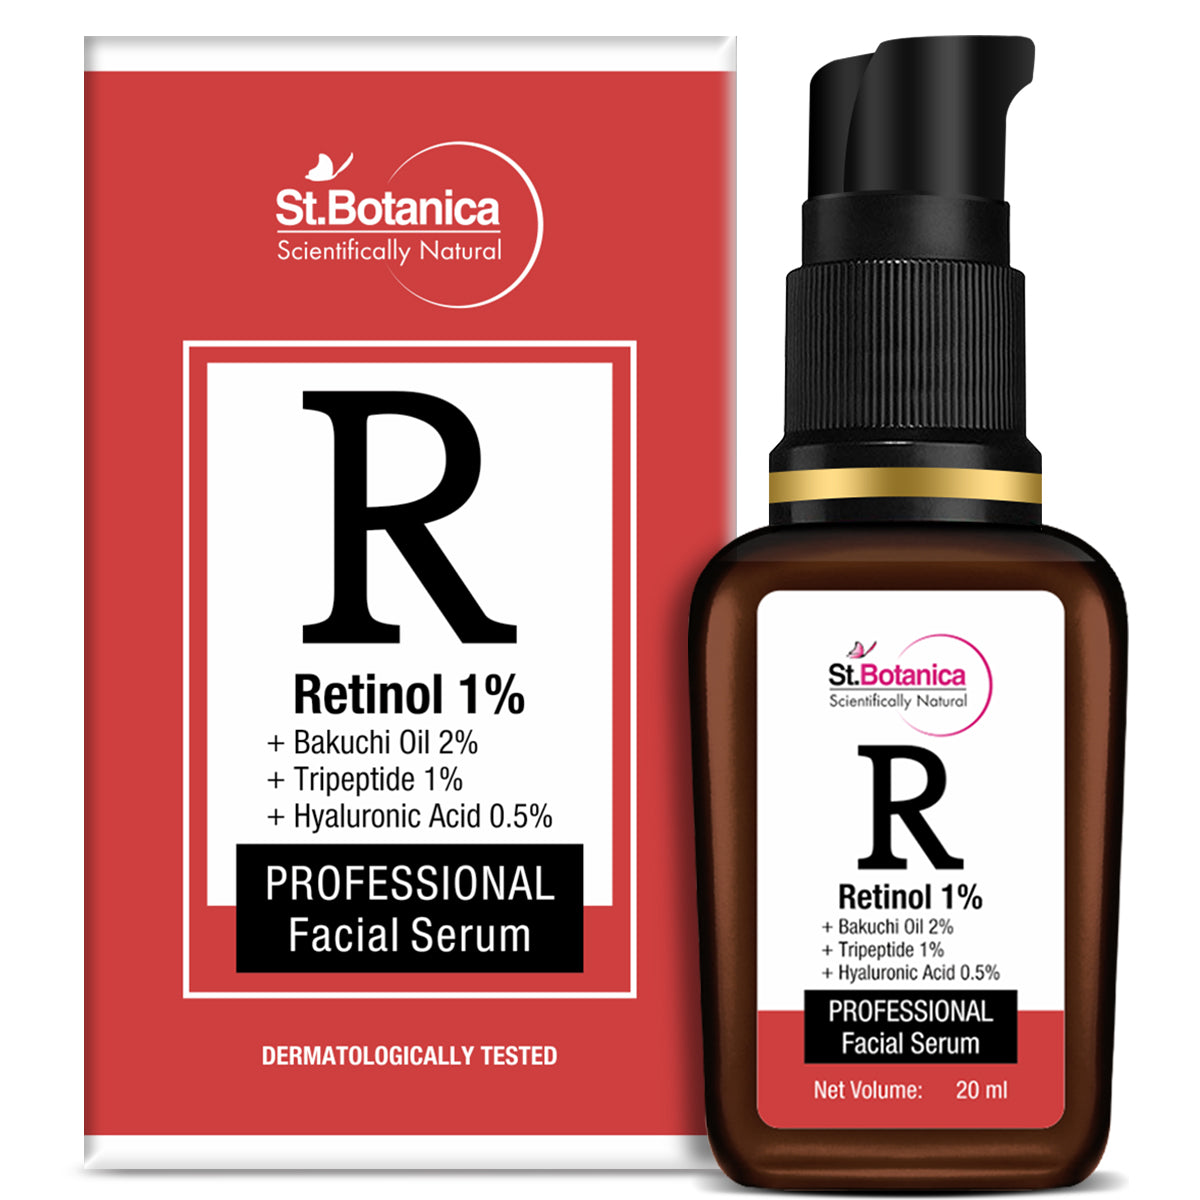 St.Botanica Retinol 1% + Bakuchi Oil 2% + Tripeptide 1% + Hyaluronic Acid 0.5% Face Serum for Wrinkles & Fine Lines, Collagen Boosting, 20 ml